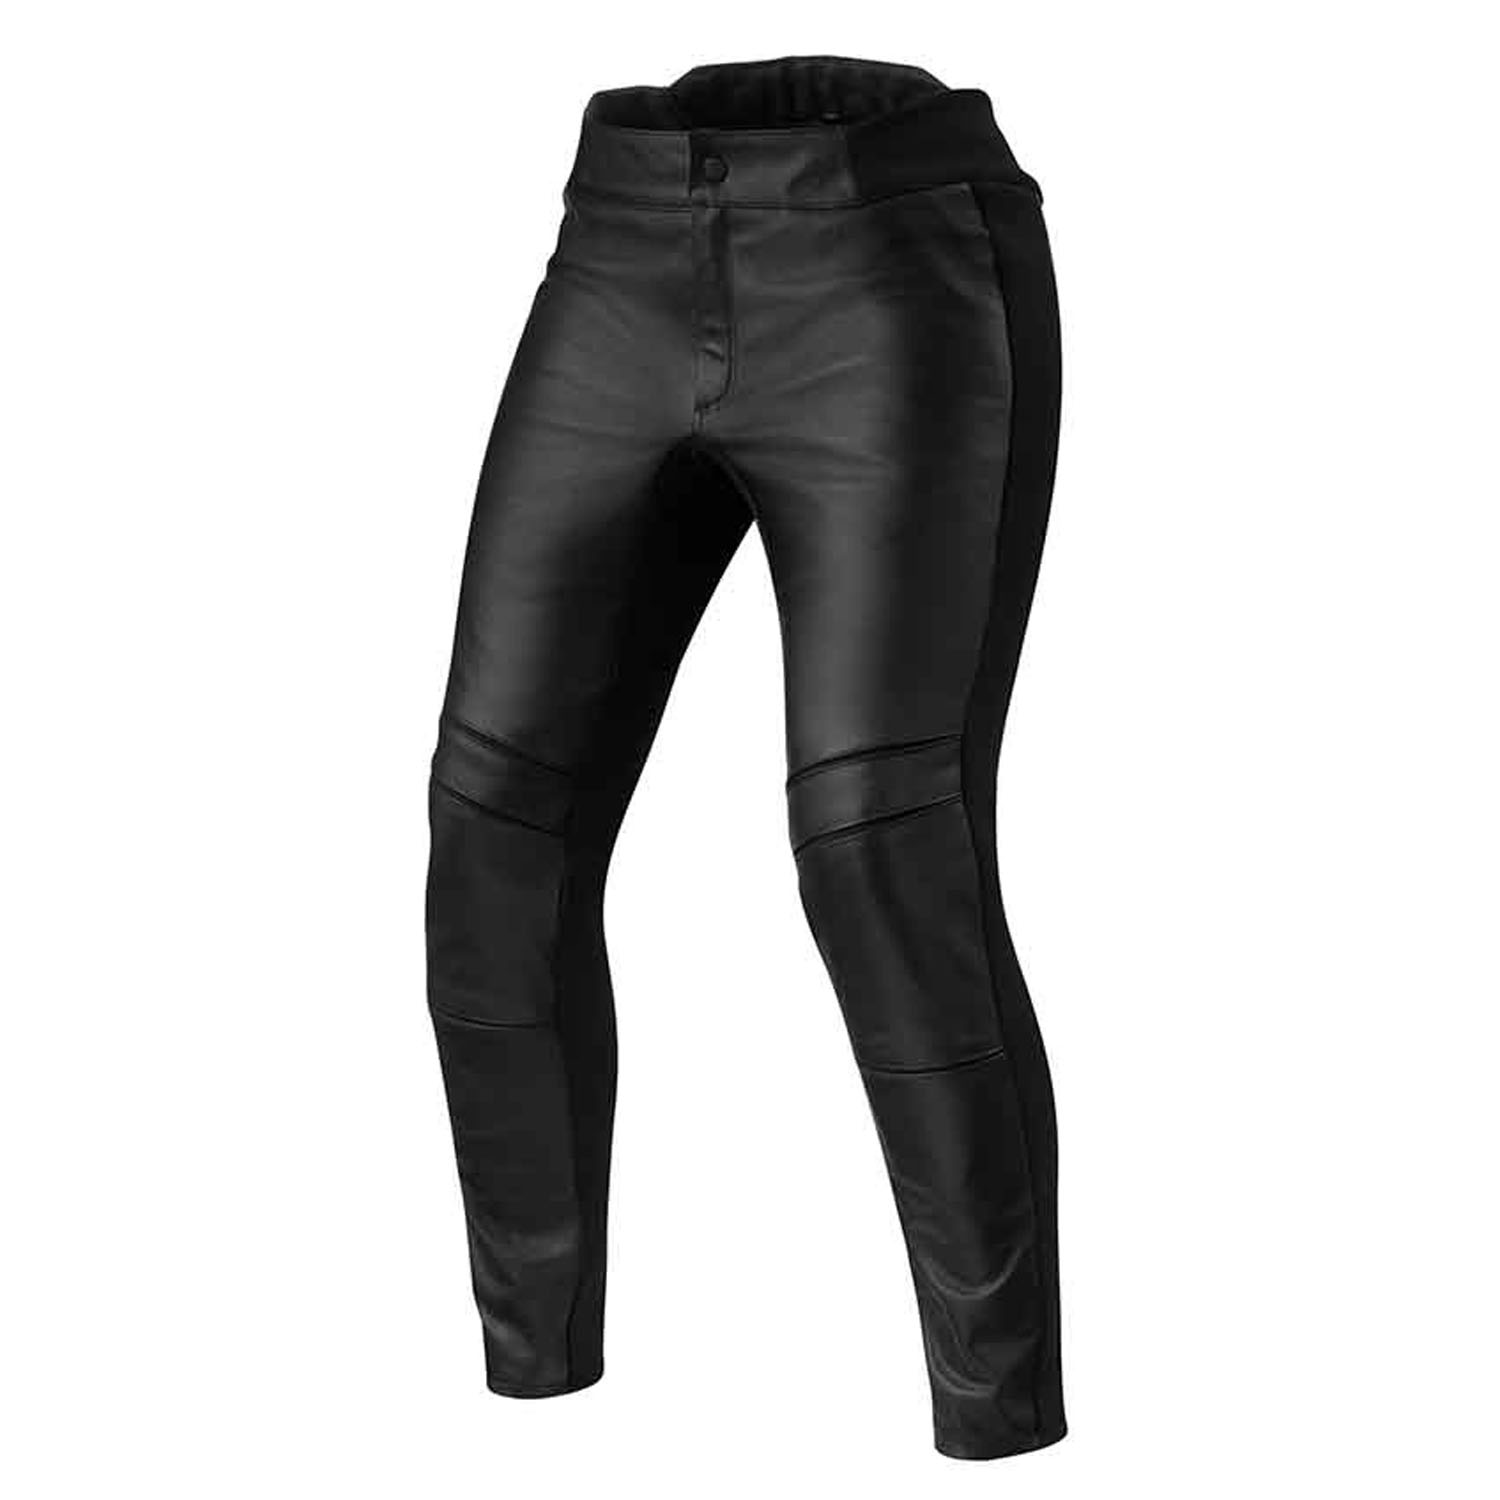 Image of REV'IT! Maci Ladies Black Short Motorcycle Pants Taille 40